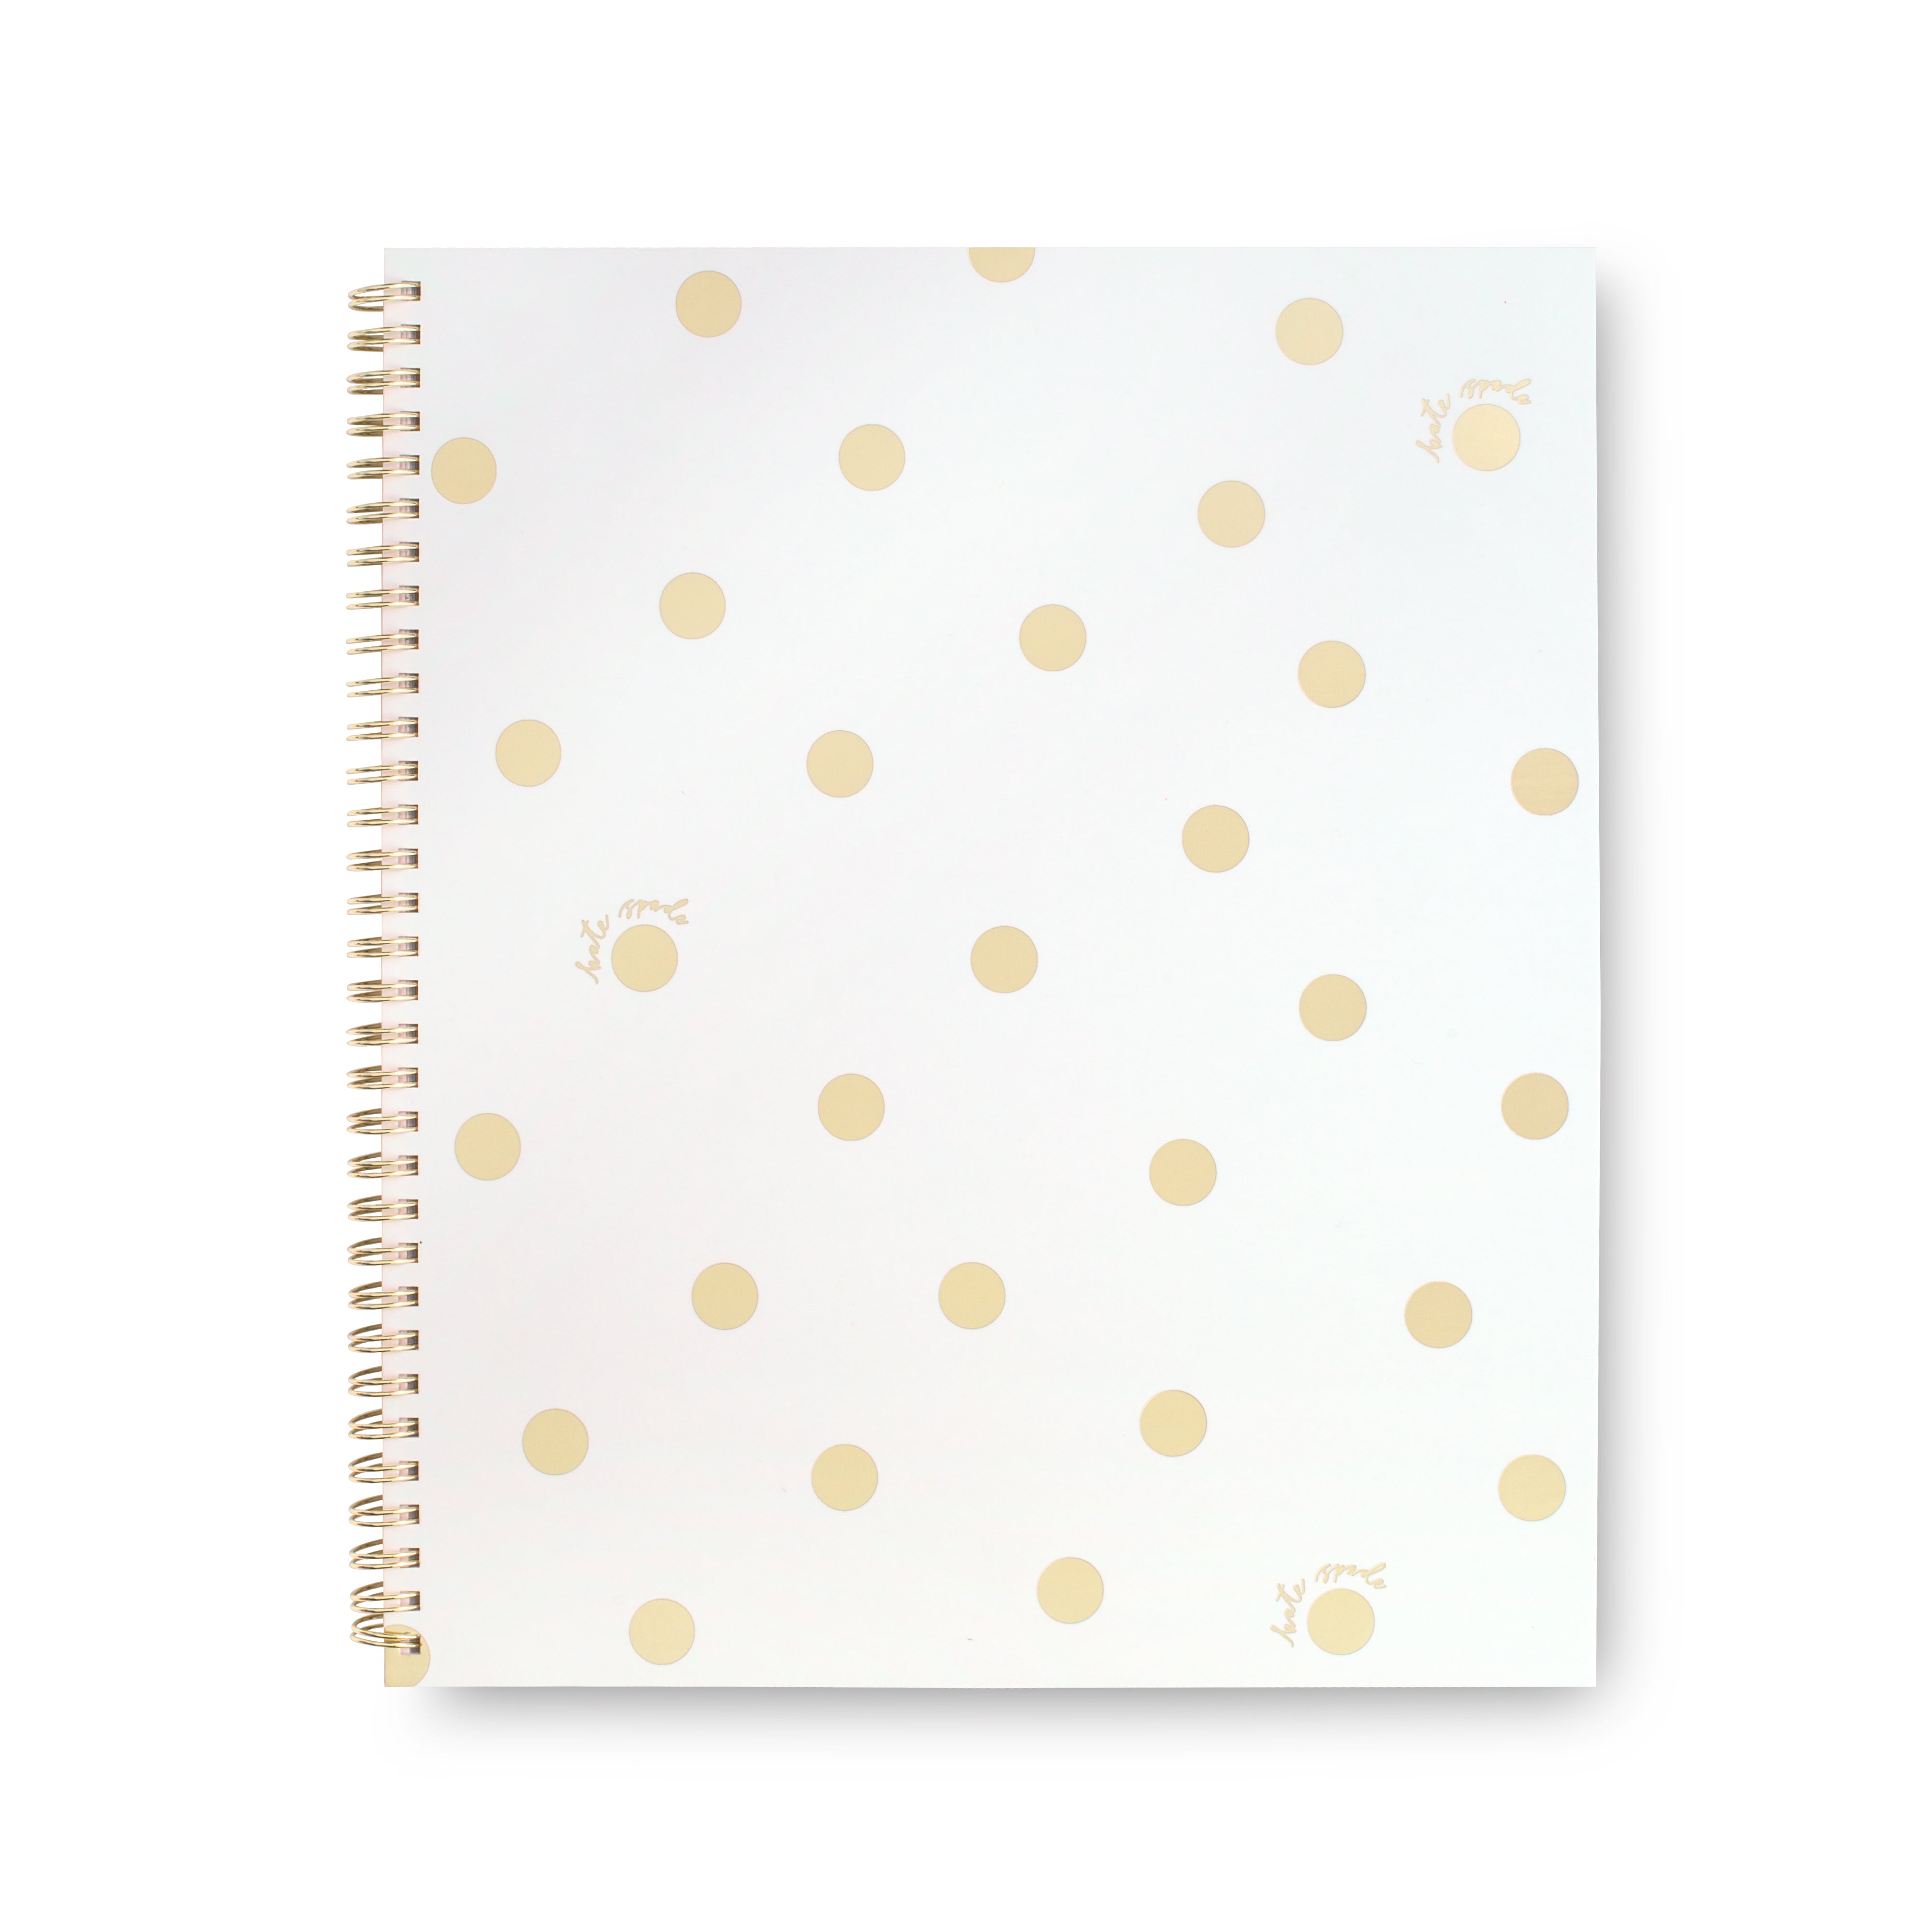 Kate Spade New York Large Spiral Notebook, Gold Dot with Script - Lifeguard  Press